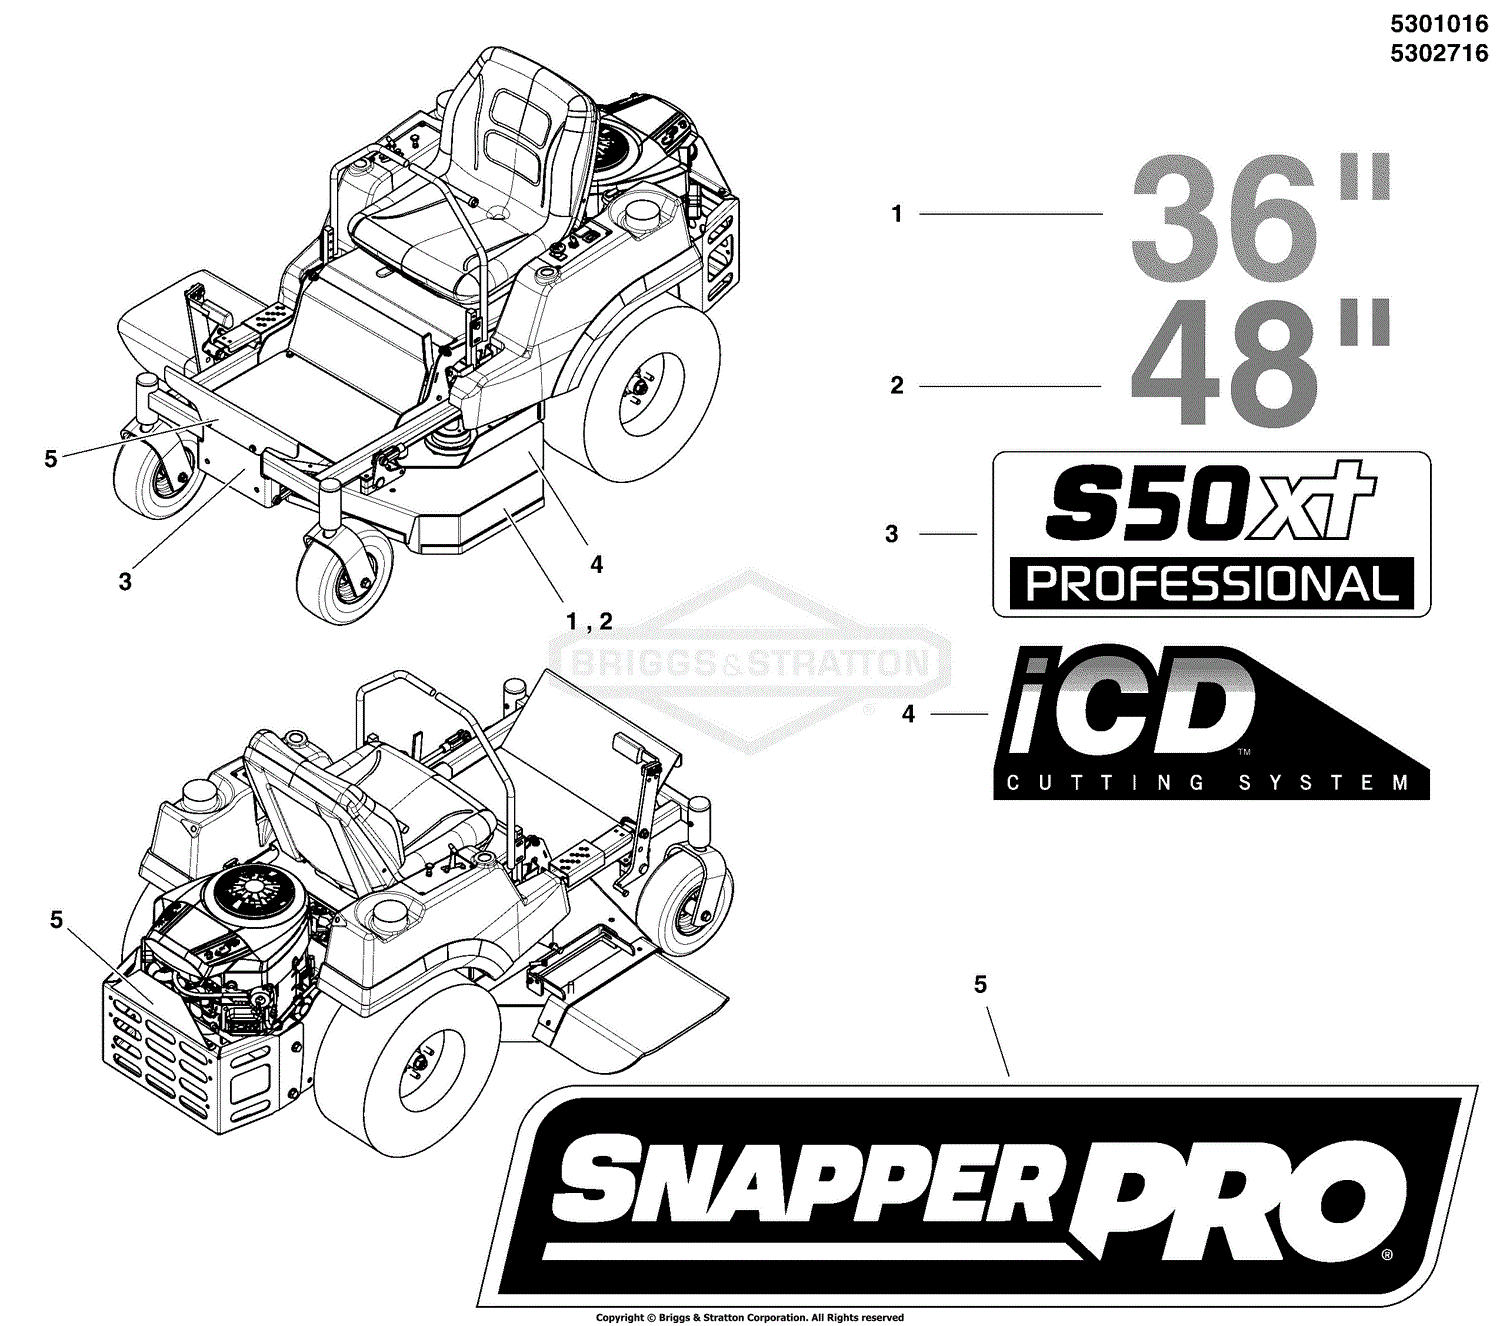 Mid Mount Zero-Turn Rider Parts Diagram. snapper s50xt price. 